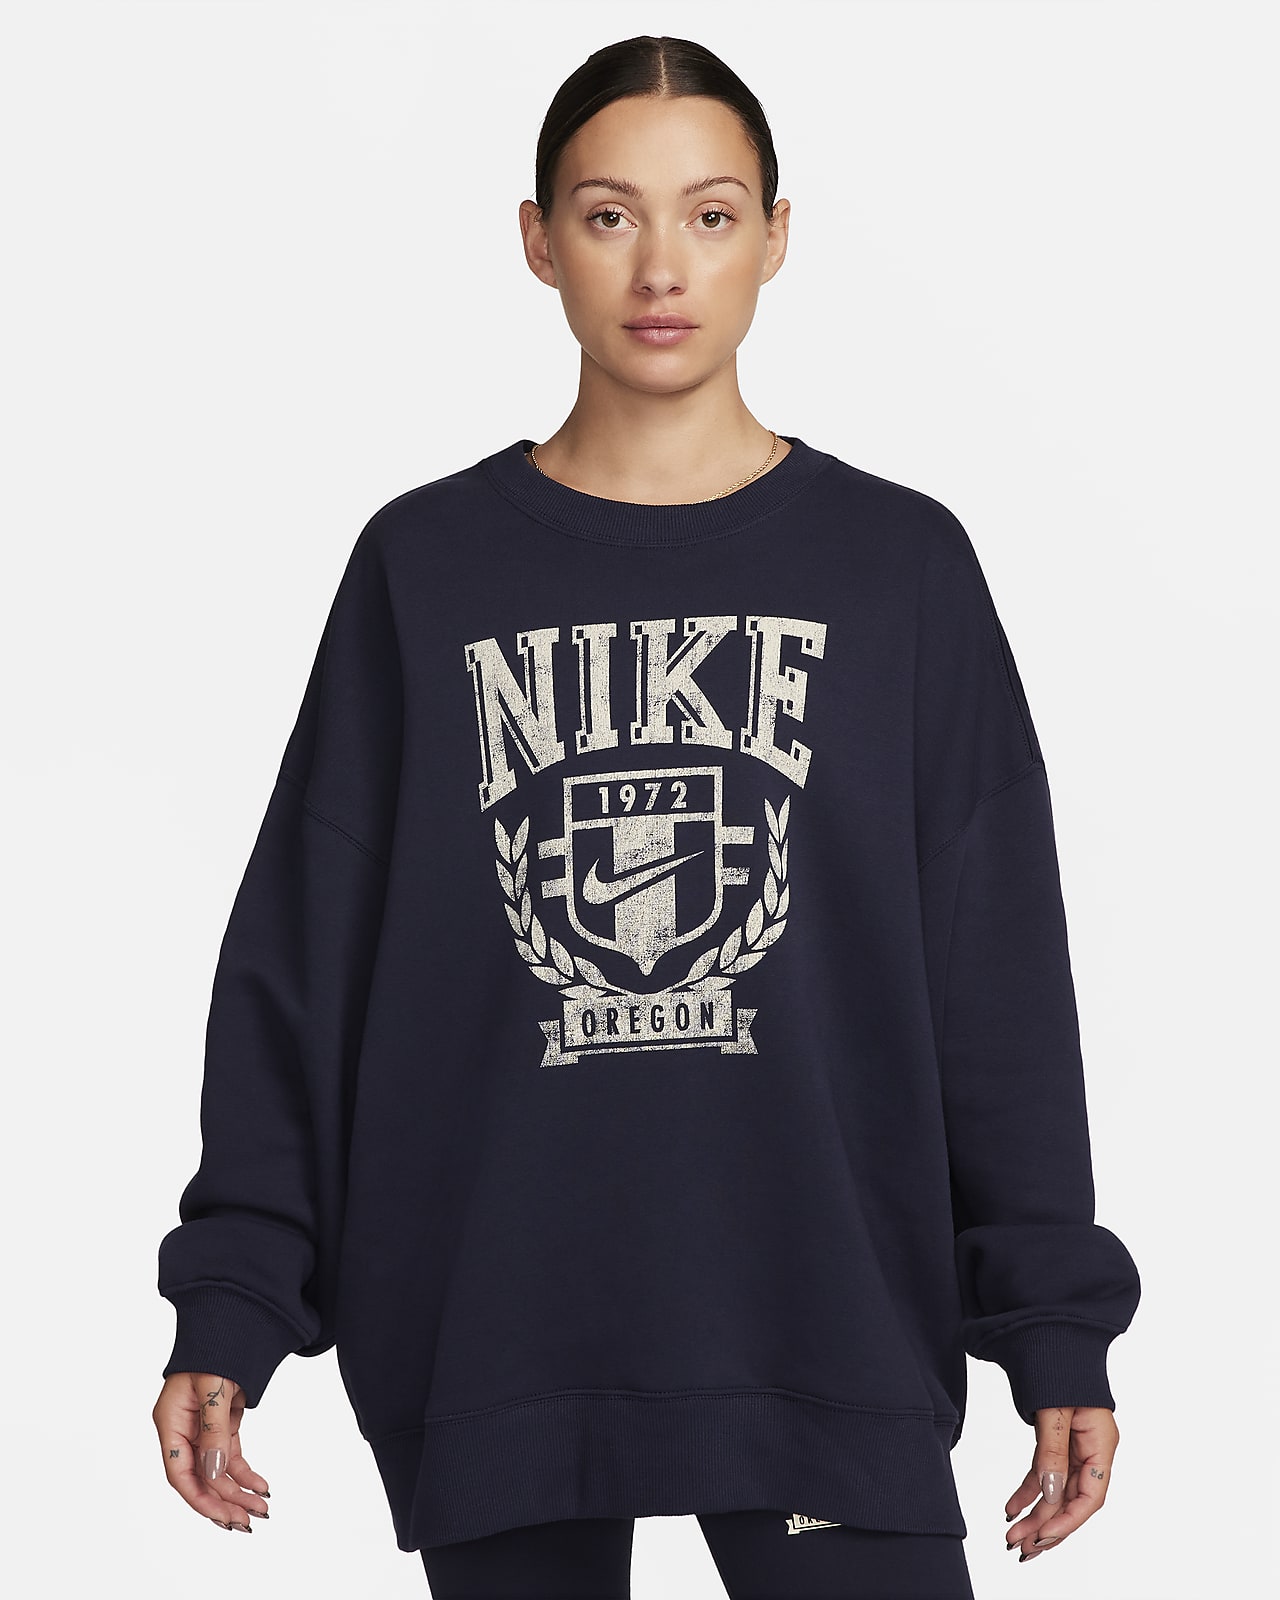 Sweatshirt de gola redonda folgada em lã cardada Nike Sportswear para mulher